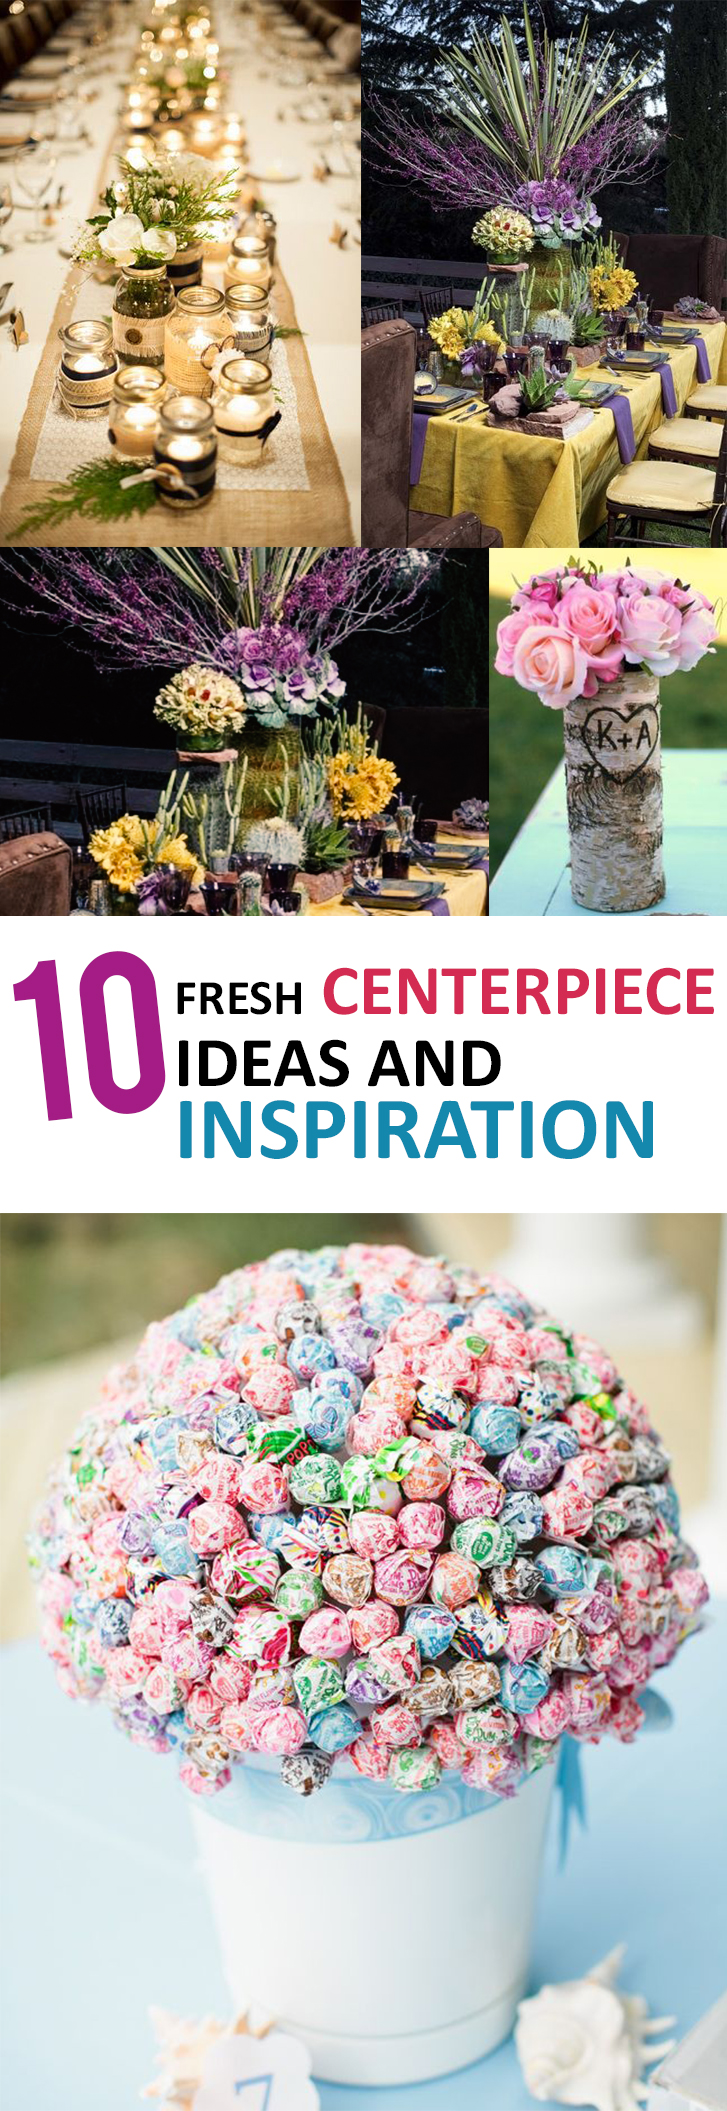 10 Fresh Centerpiece Ideas and Inspiration